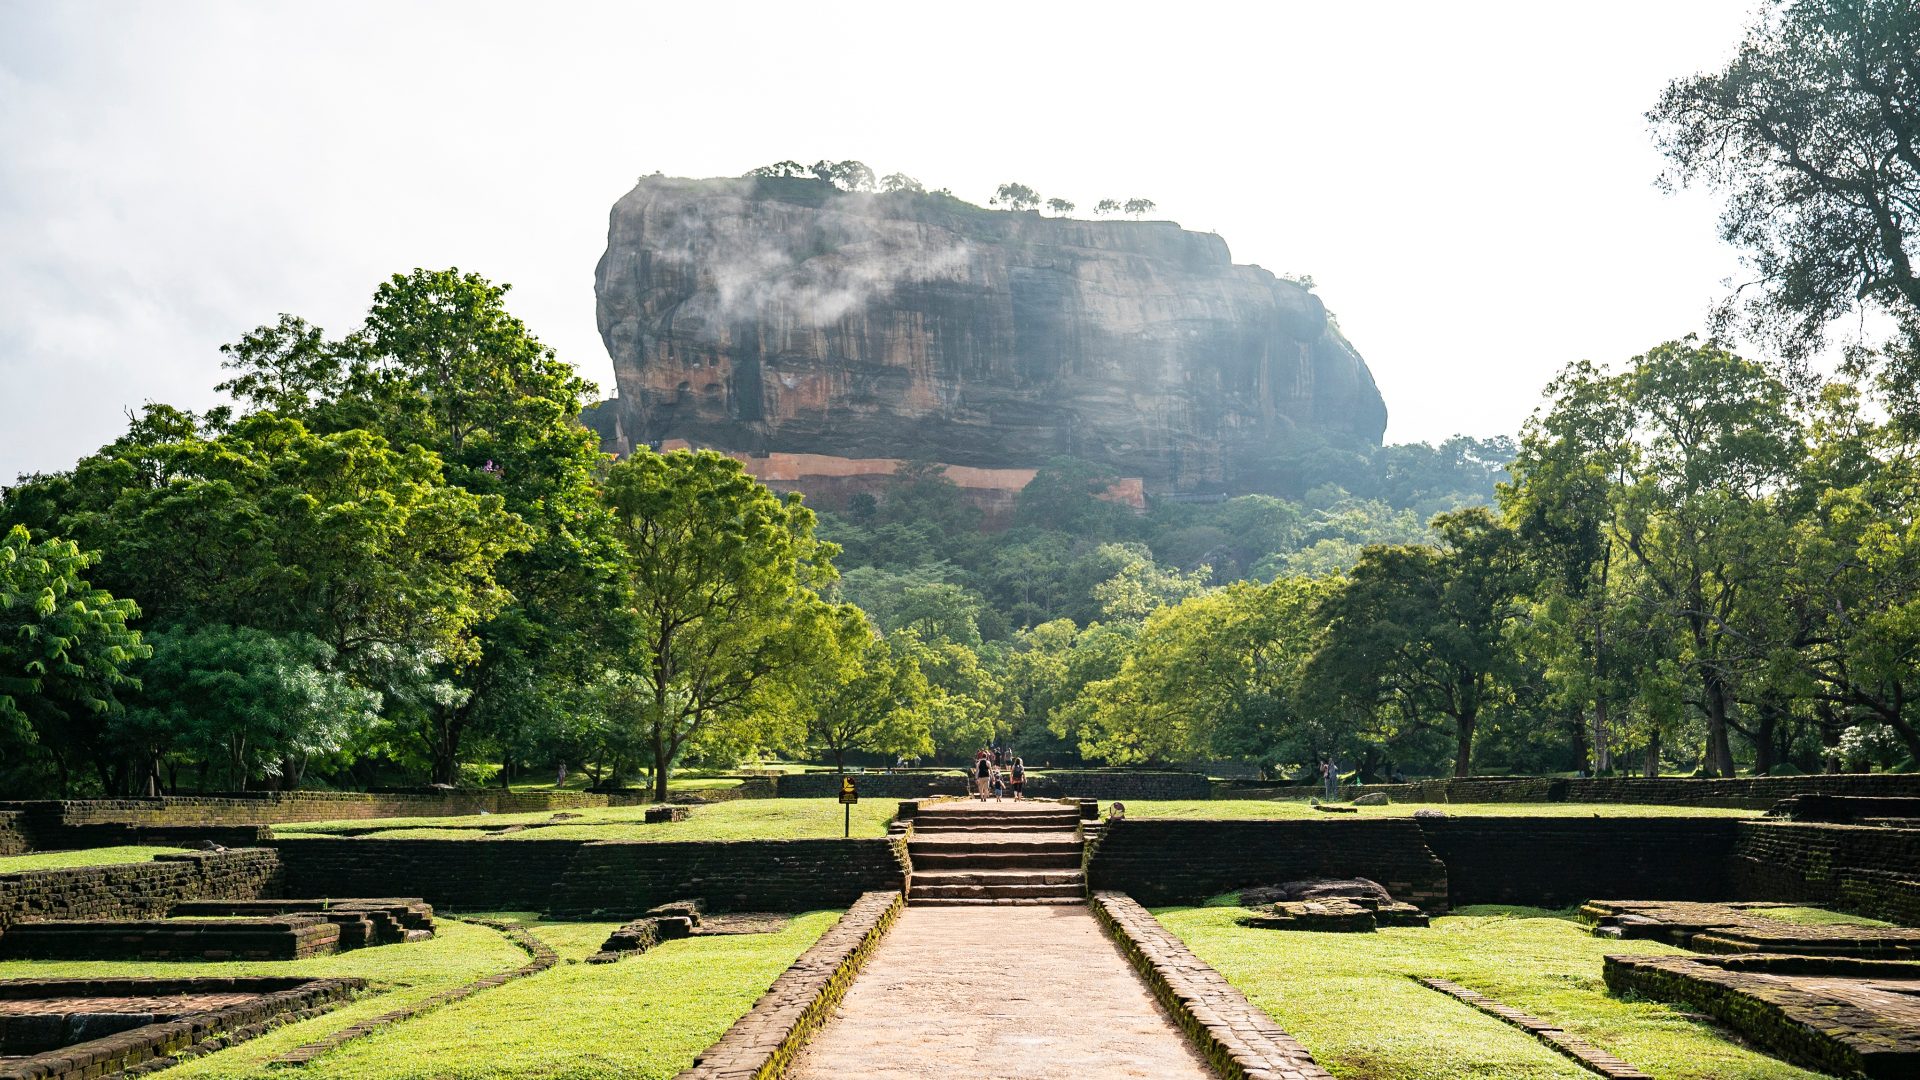 The imposing figure of Sigiriya surrounded by lush greenery. 